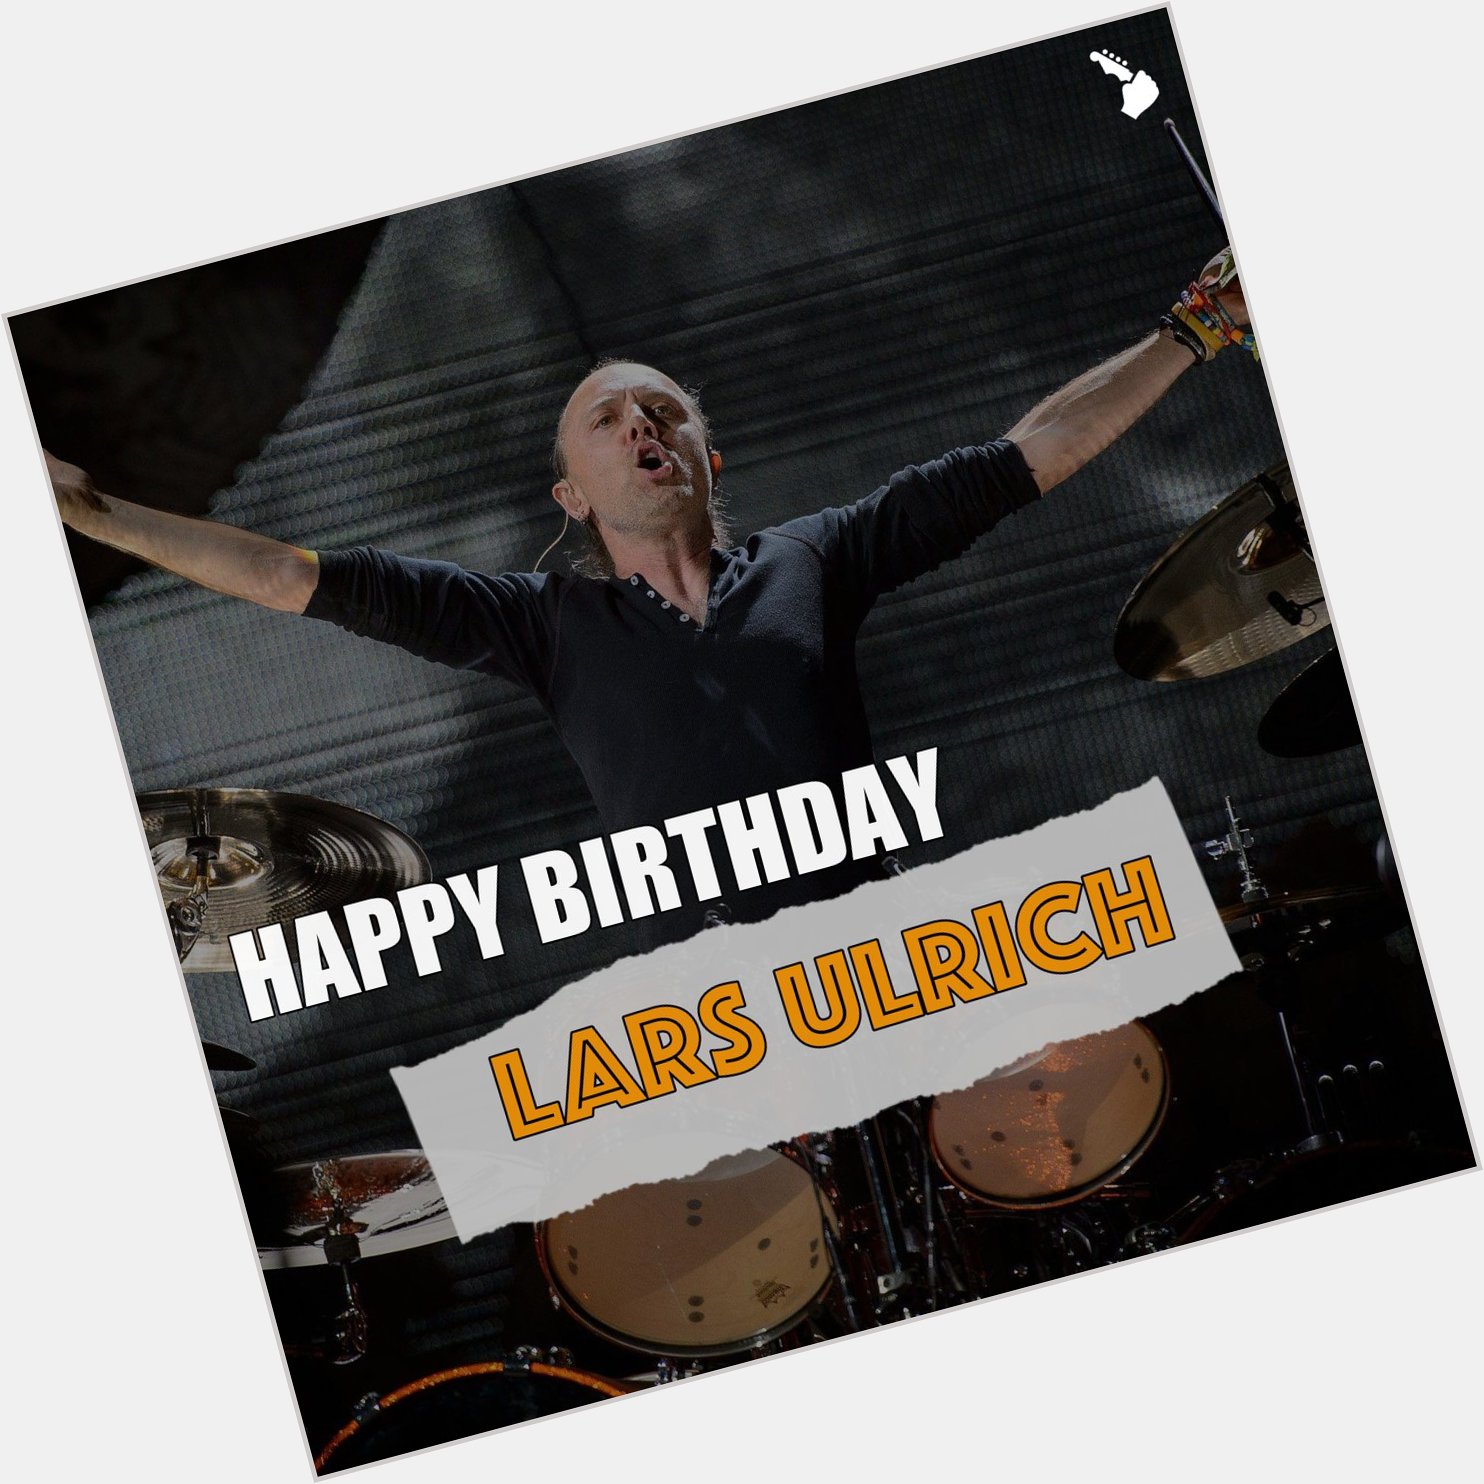 Happy Birthday, Lars Ulrich!  